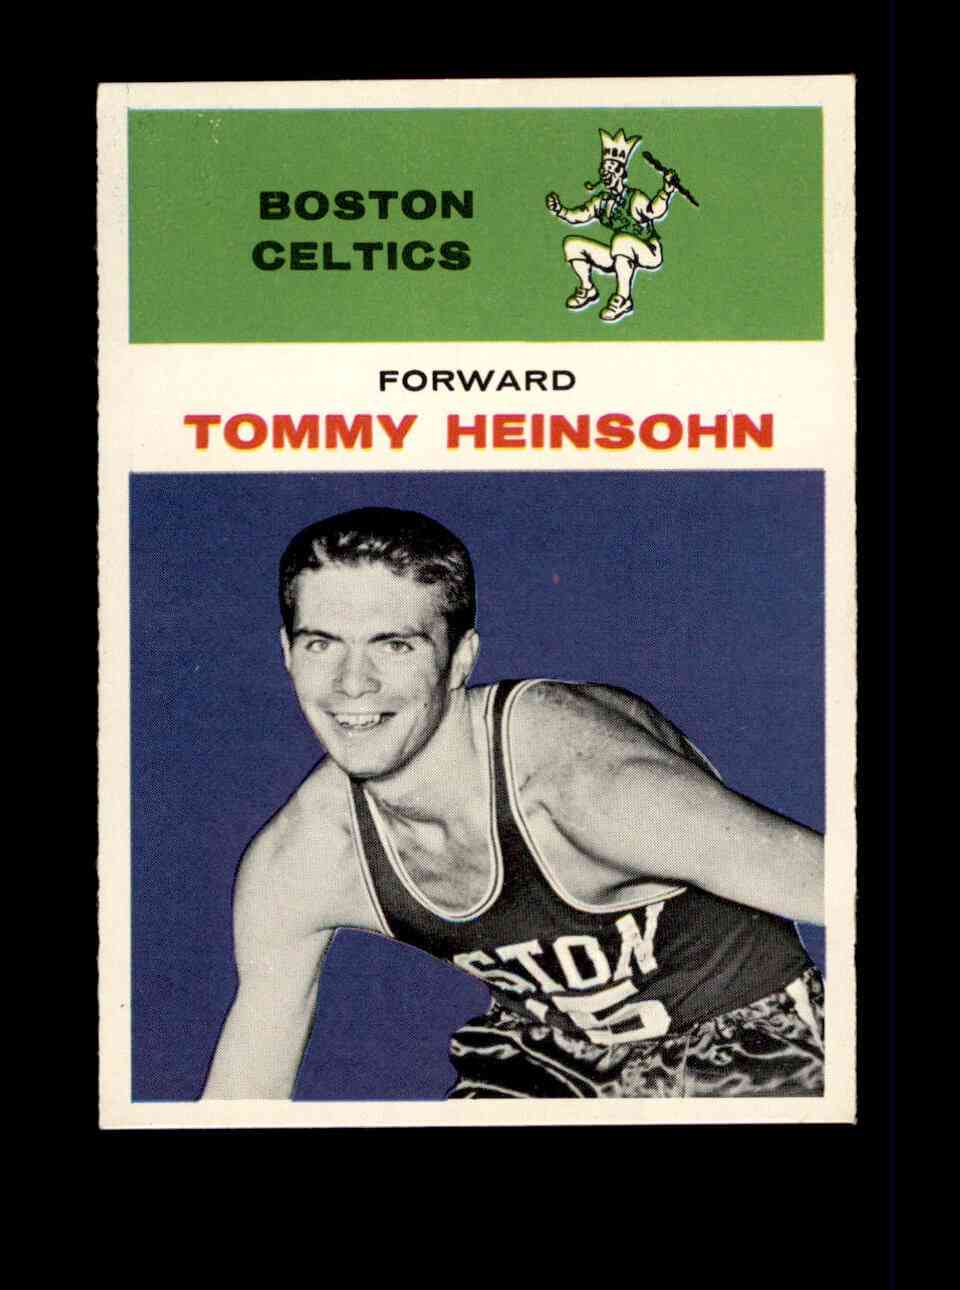 1961 Fleer Regular (Basketball) Card# 19 Tommy Heinsohn of the